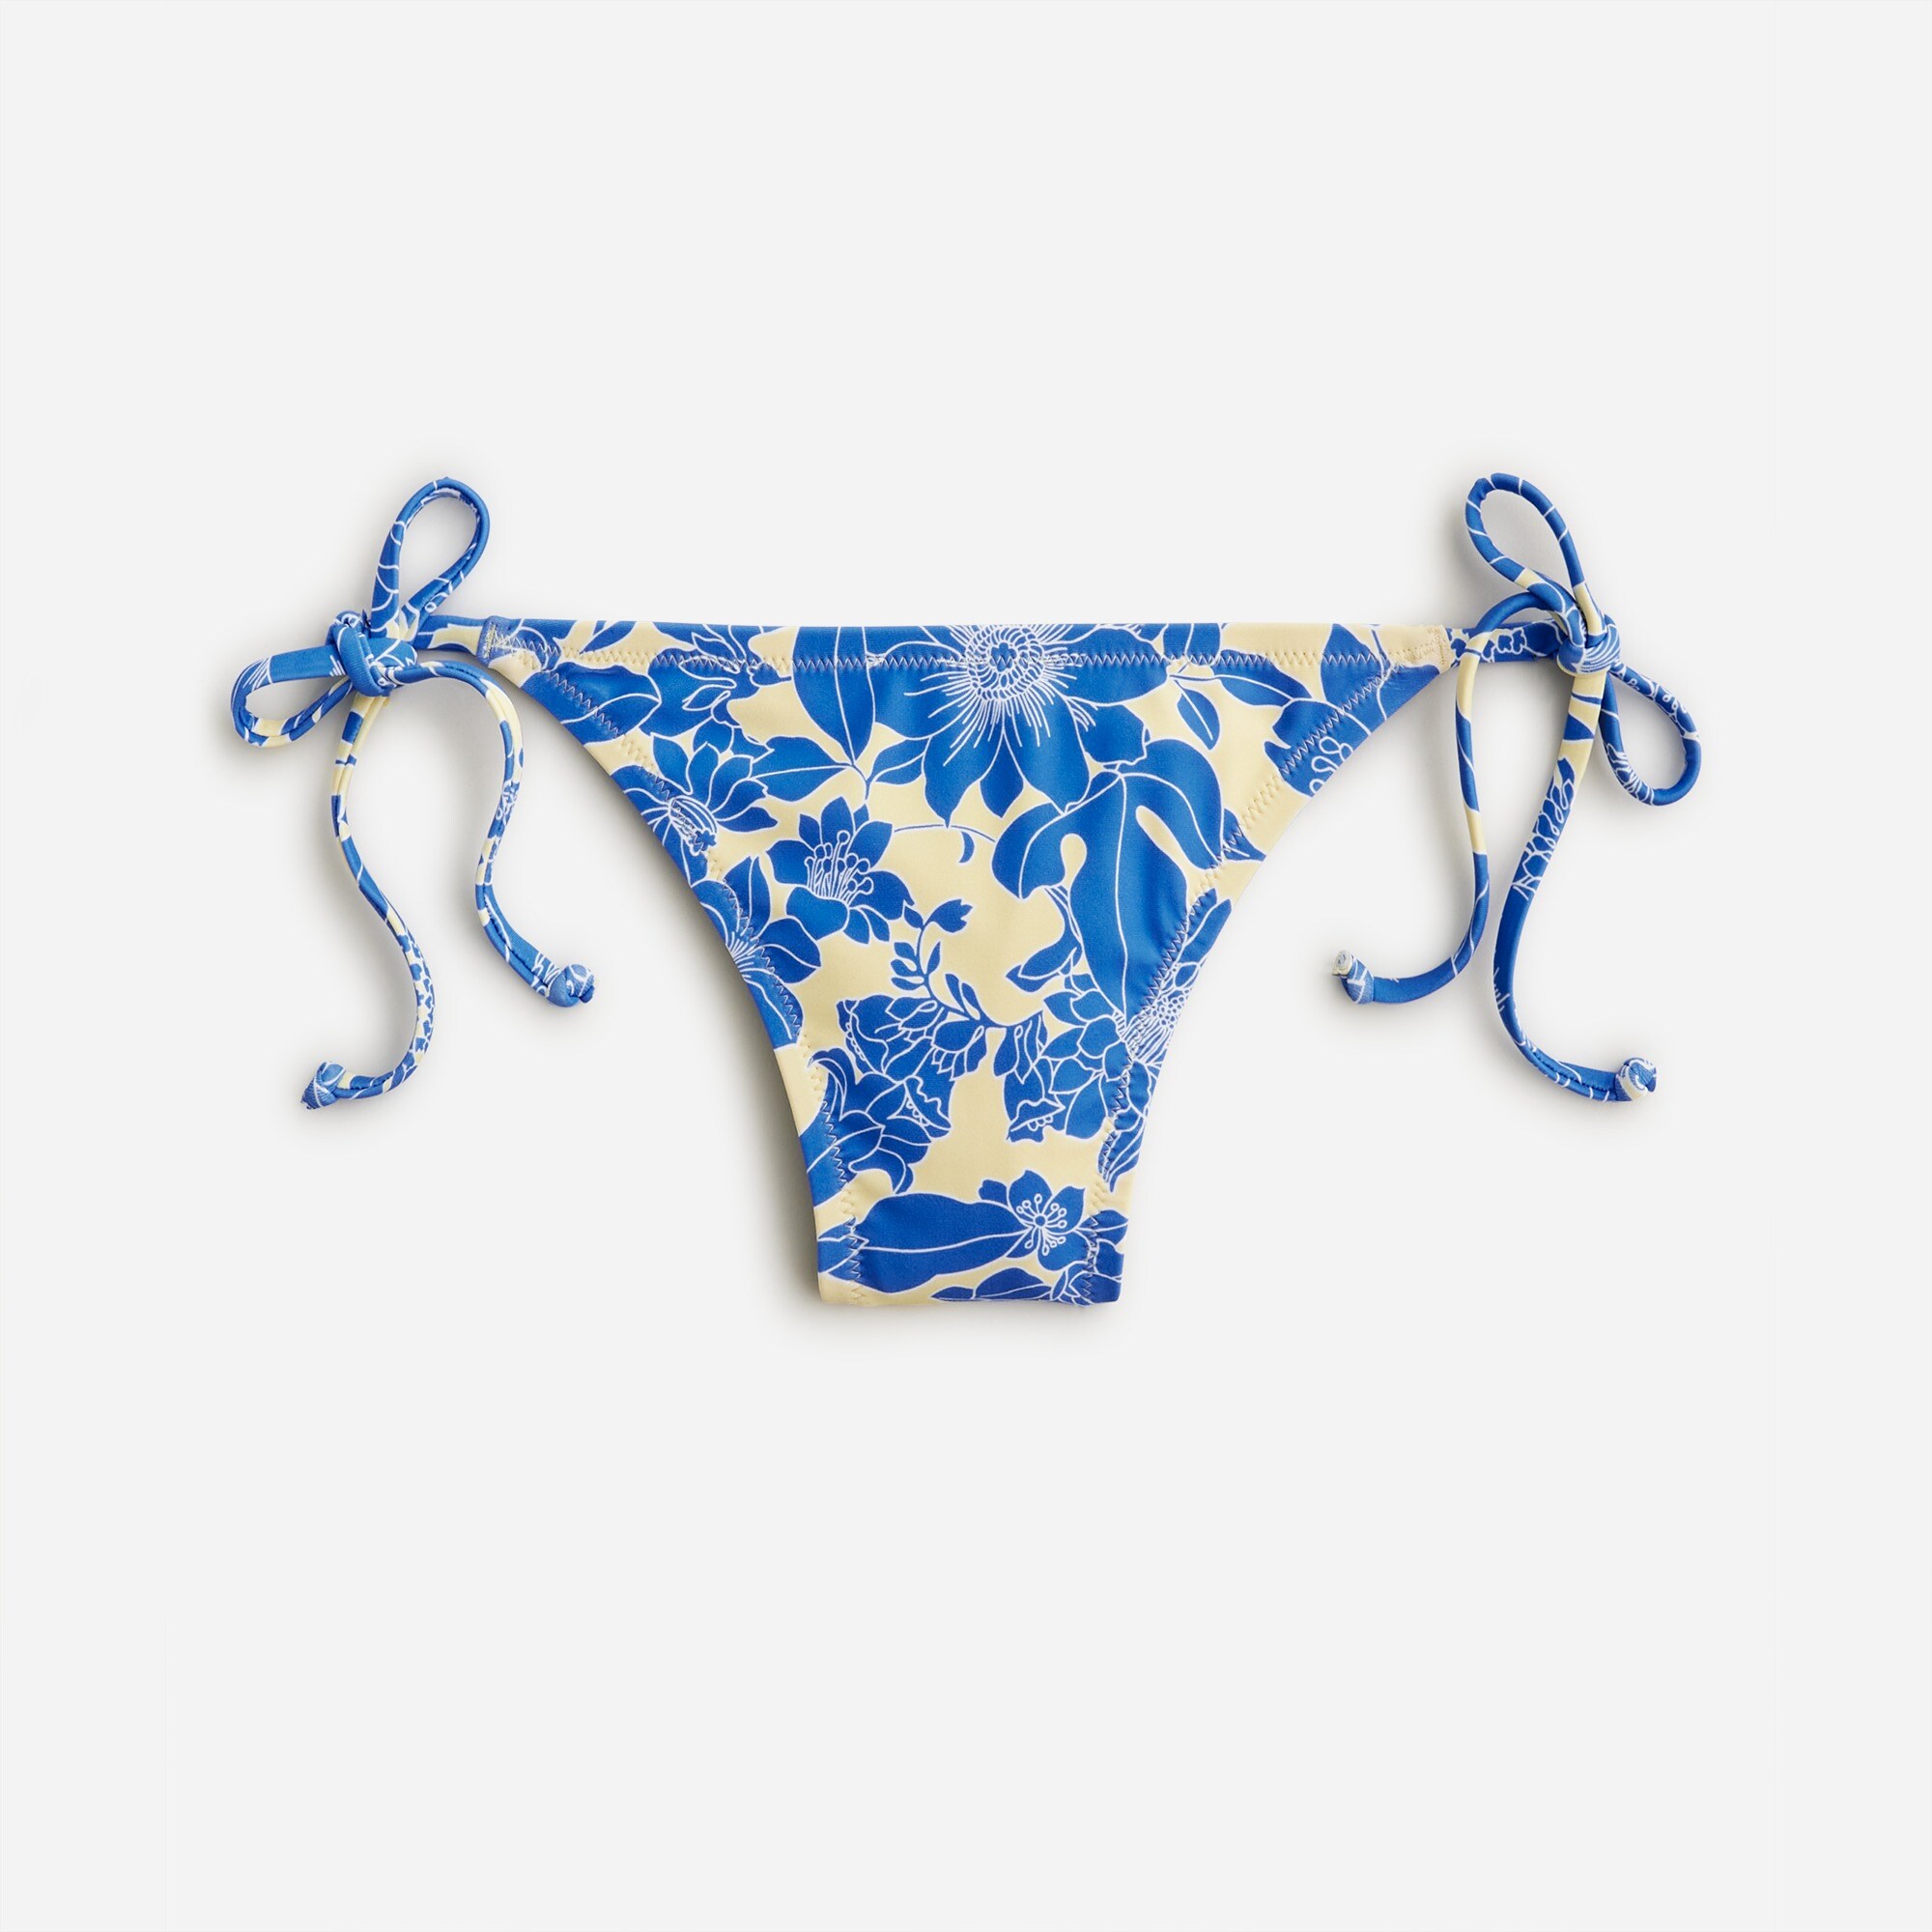  String hipster full-coverage bikini bottom in blue floral